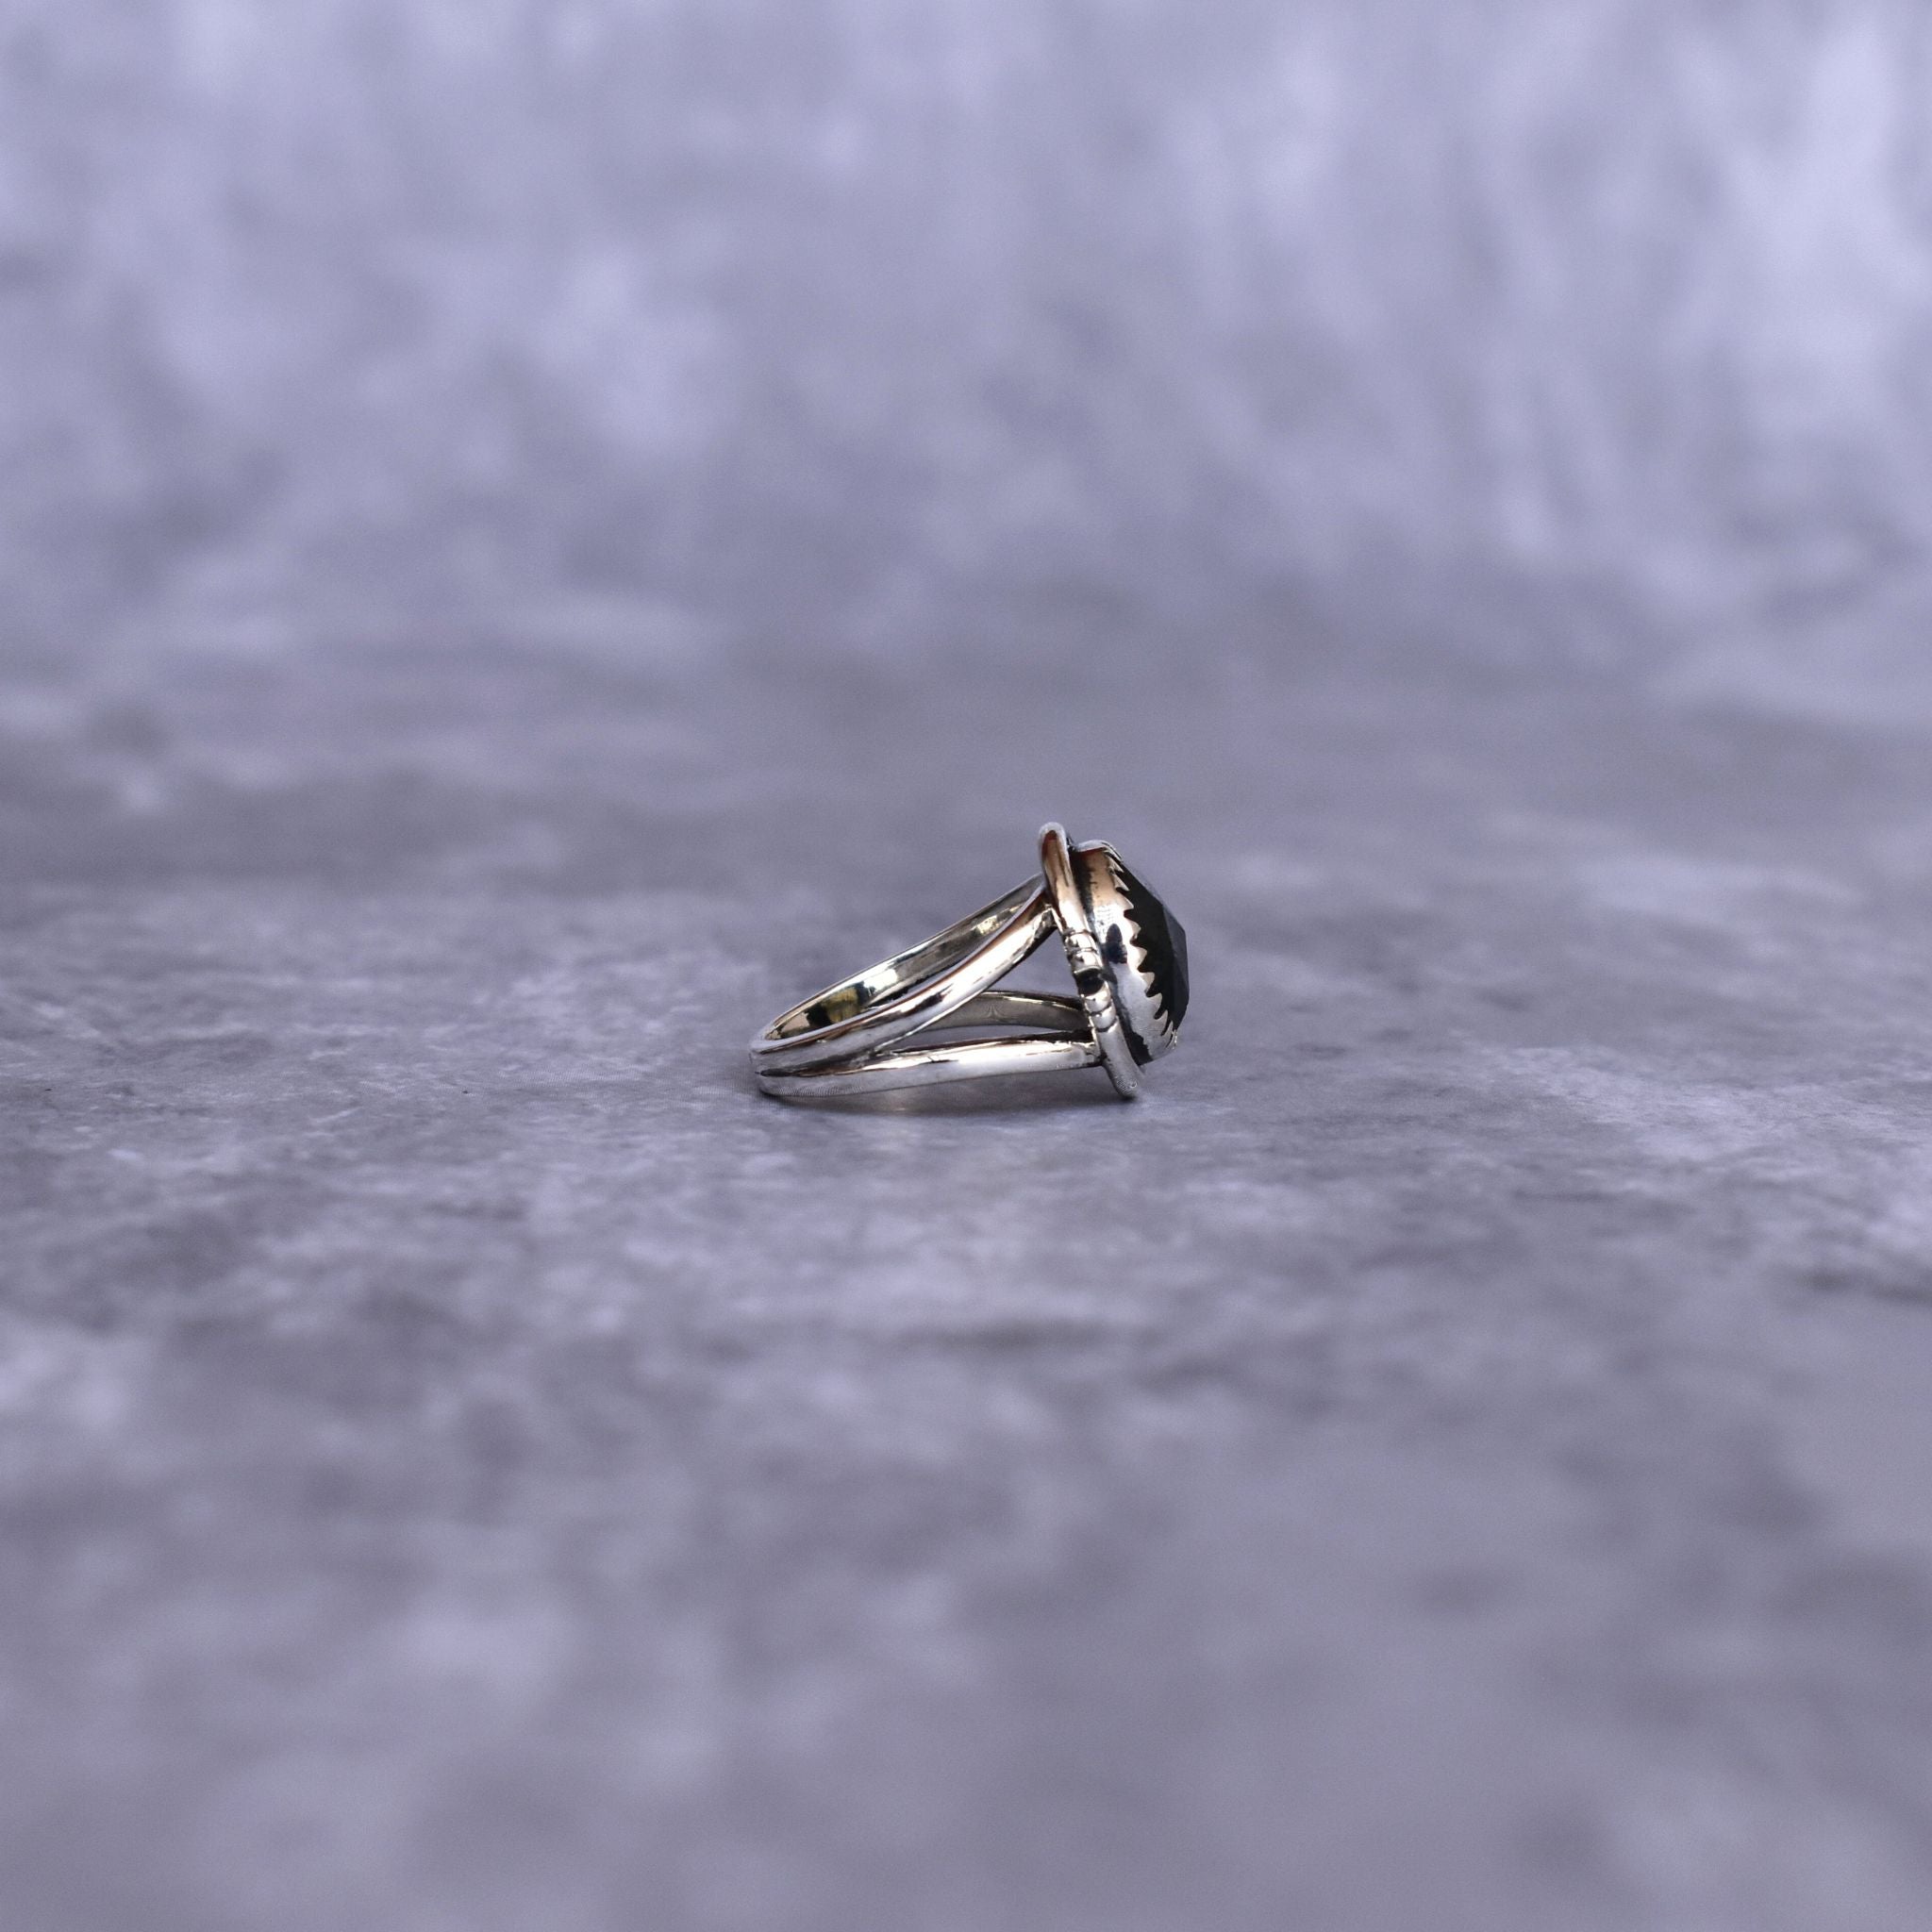 Celestial Charm - Labradorite Ring